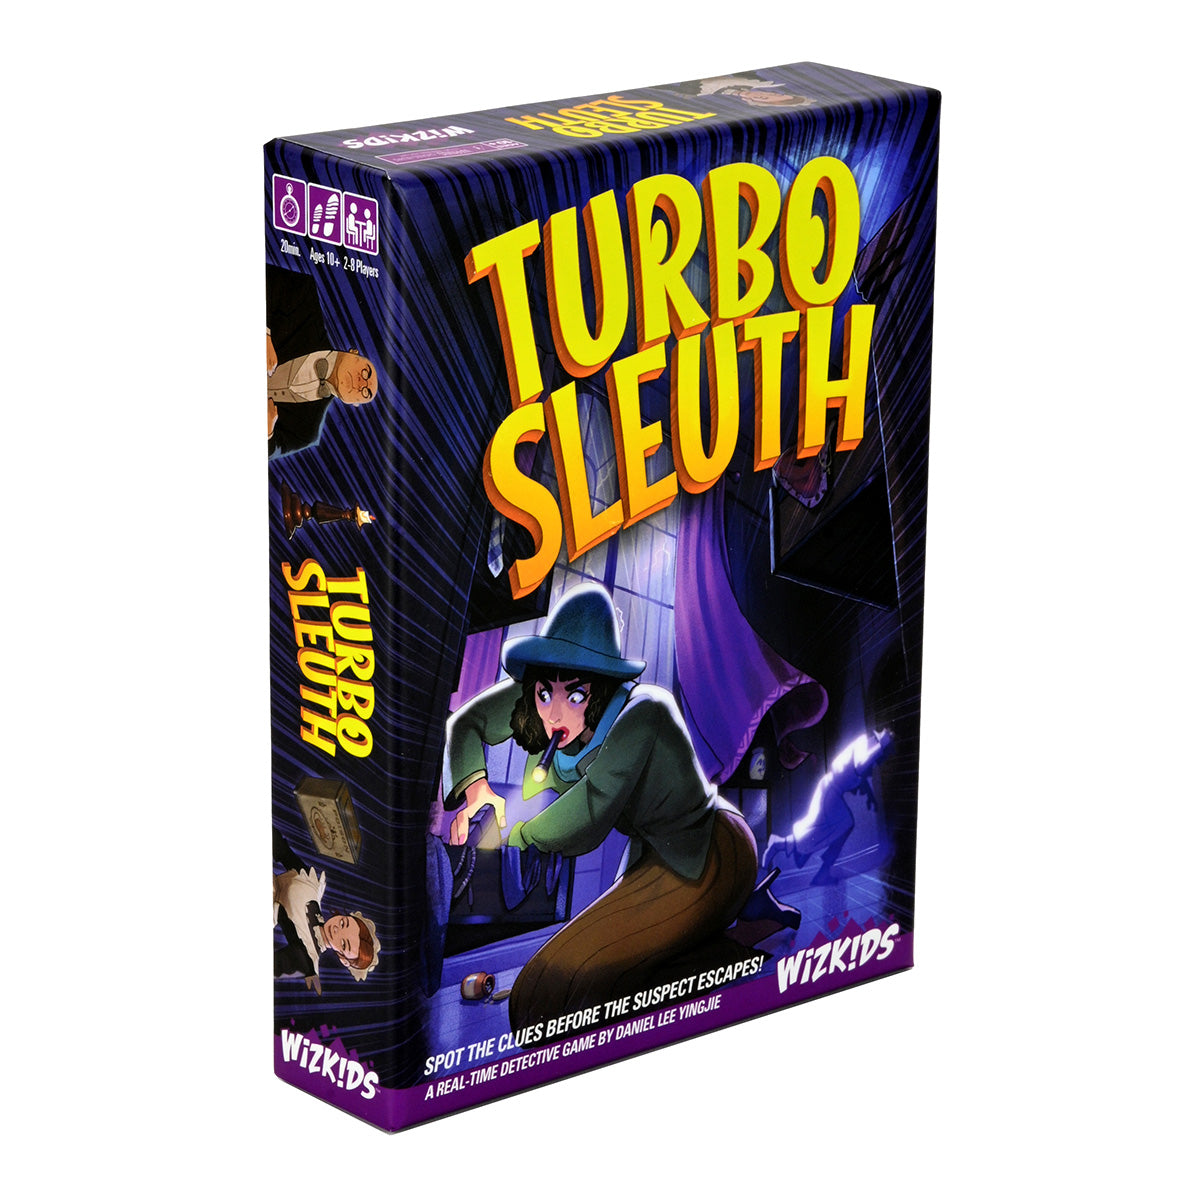 Turbo Sleuth